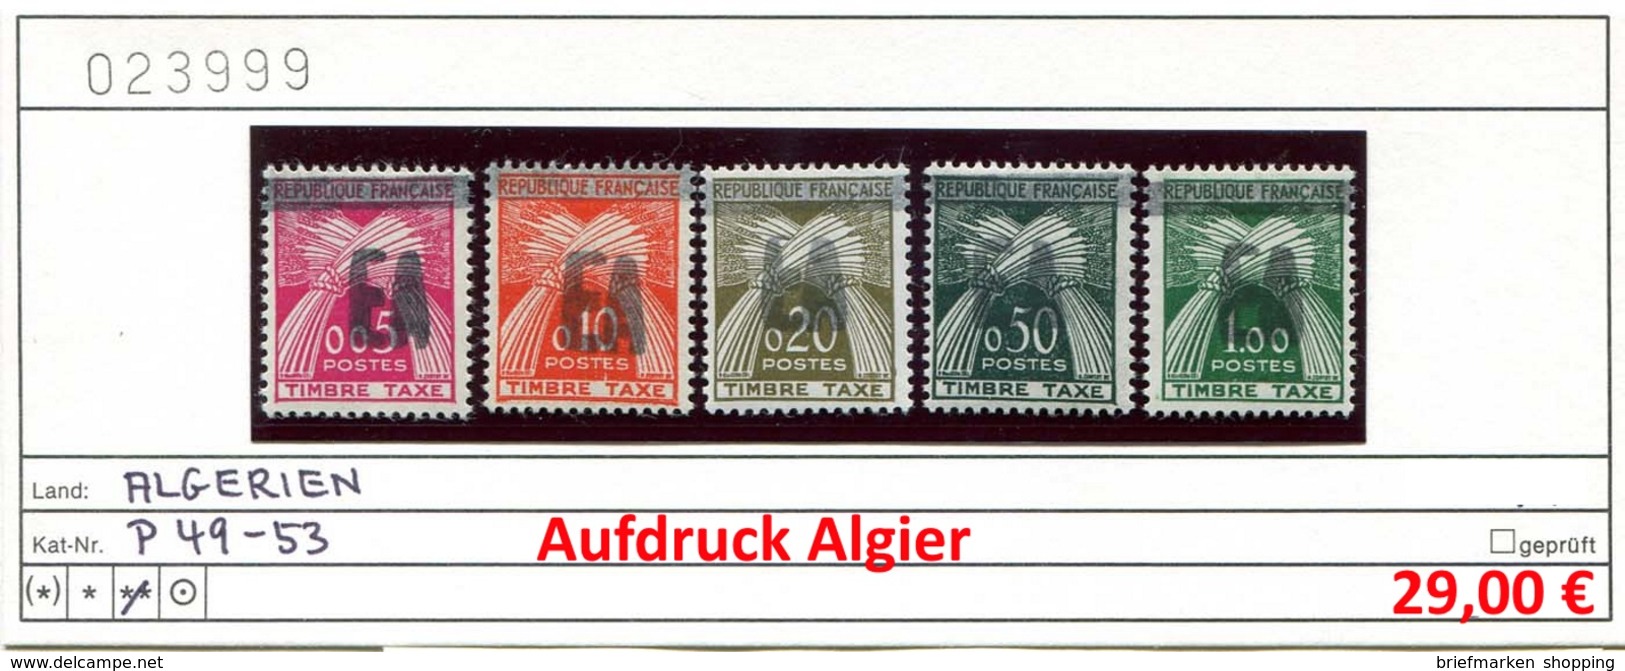 Algerien - Algerie - Algeria - Michel Porto / Taxe 49-53 (Algier-Aufdruck) - ** Postfrisch Mnh Neuf Postfris - Algerien (1962-...)